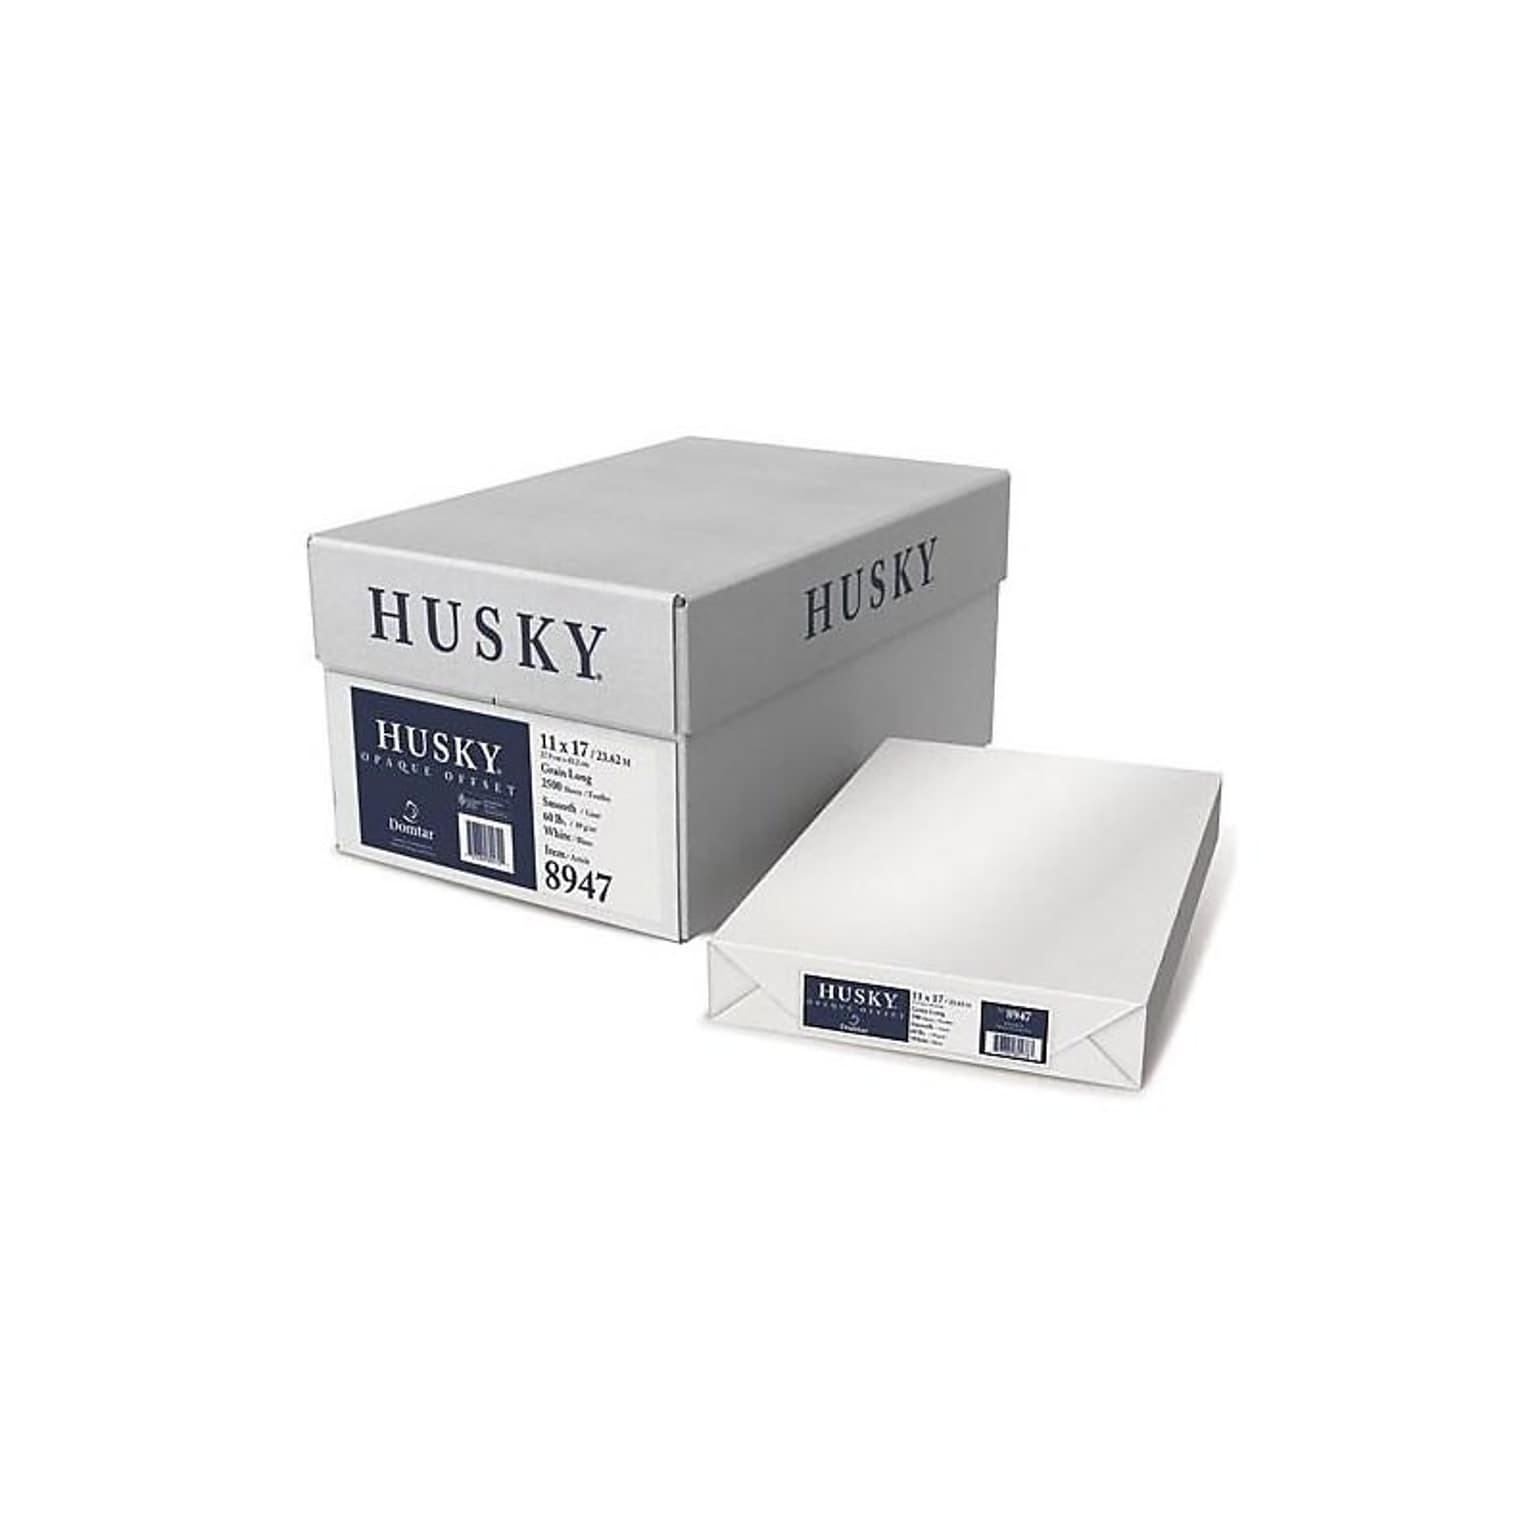 Domtar Husky Opaque Offset 11 x 17 Multipurpose Paper, 24 lbs., 94 Brightness, 2500 Sheets/Carton (8947)